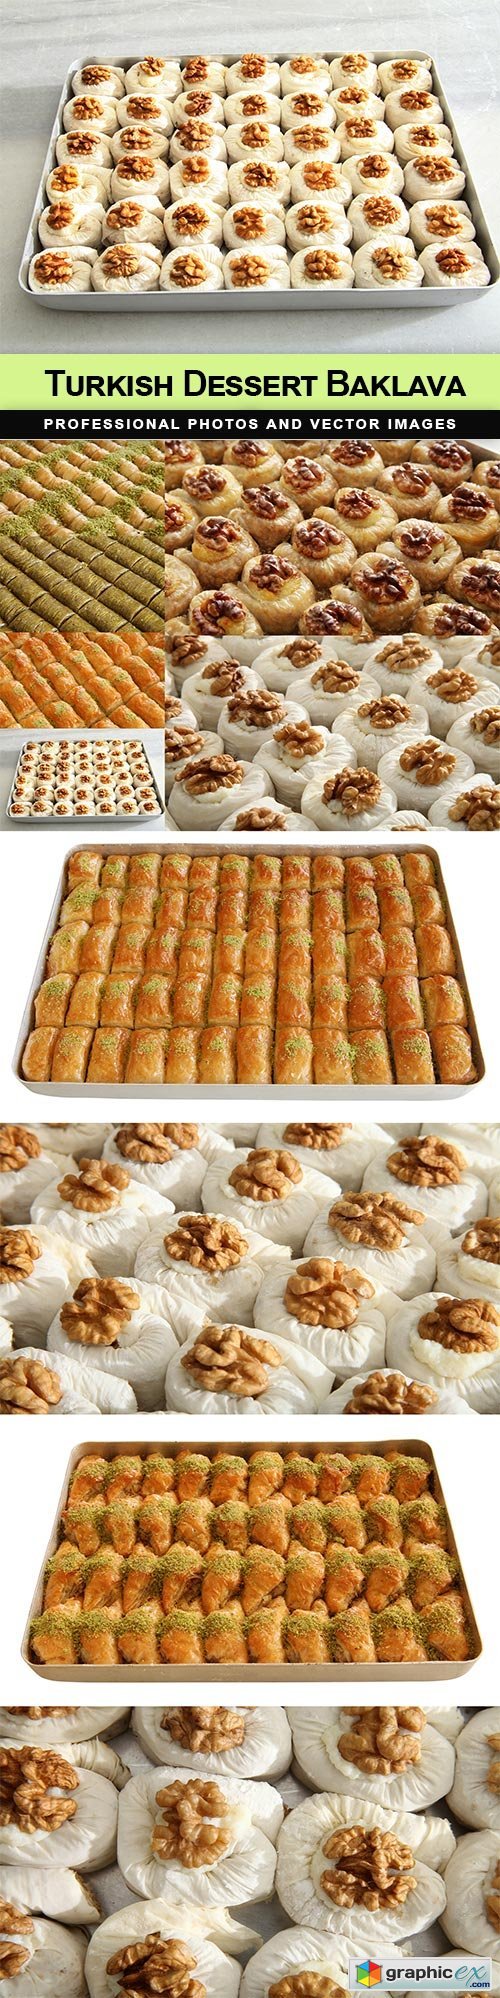 Turkish Dessert Baklava - 10 UHQ JPEG